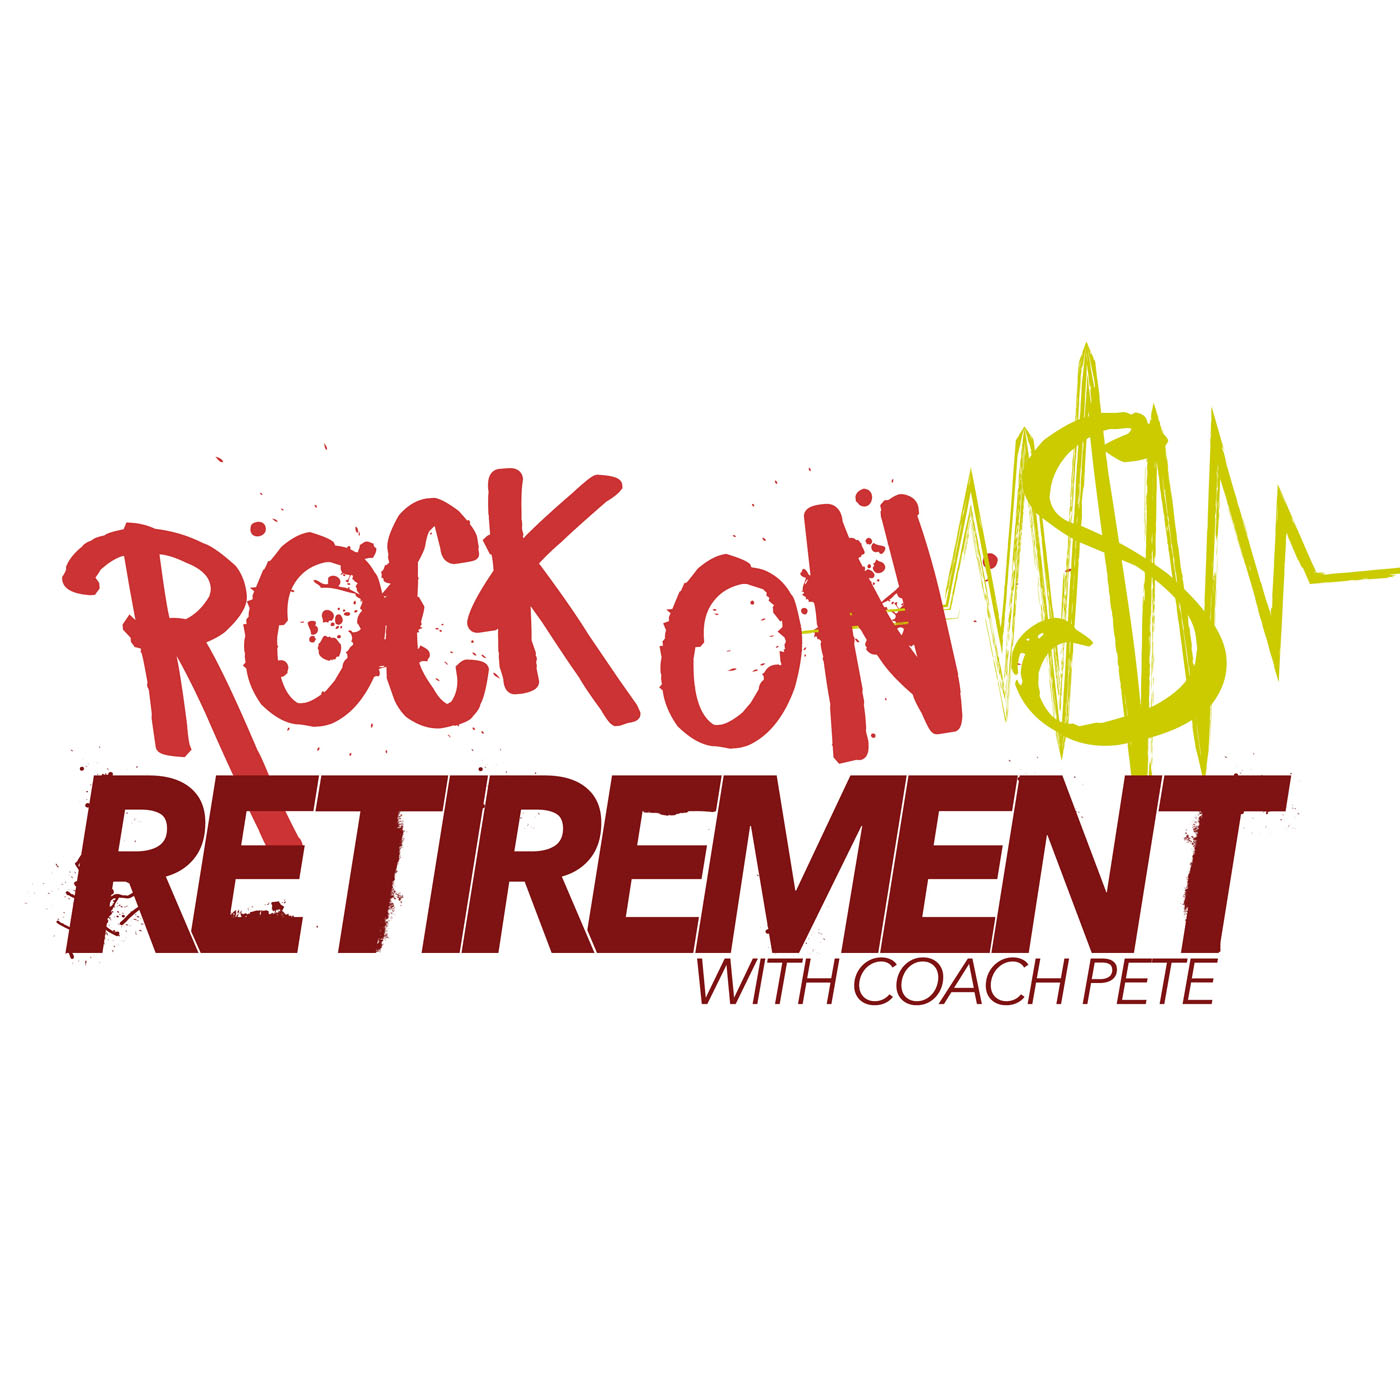 Build up your Retirement Foundation!